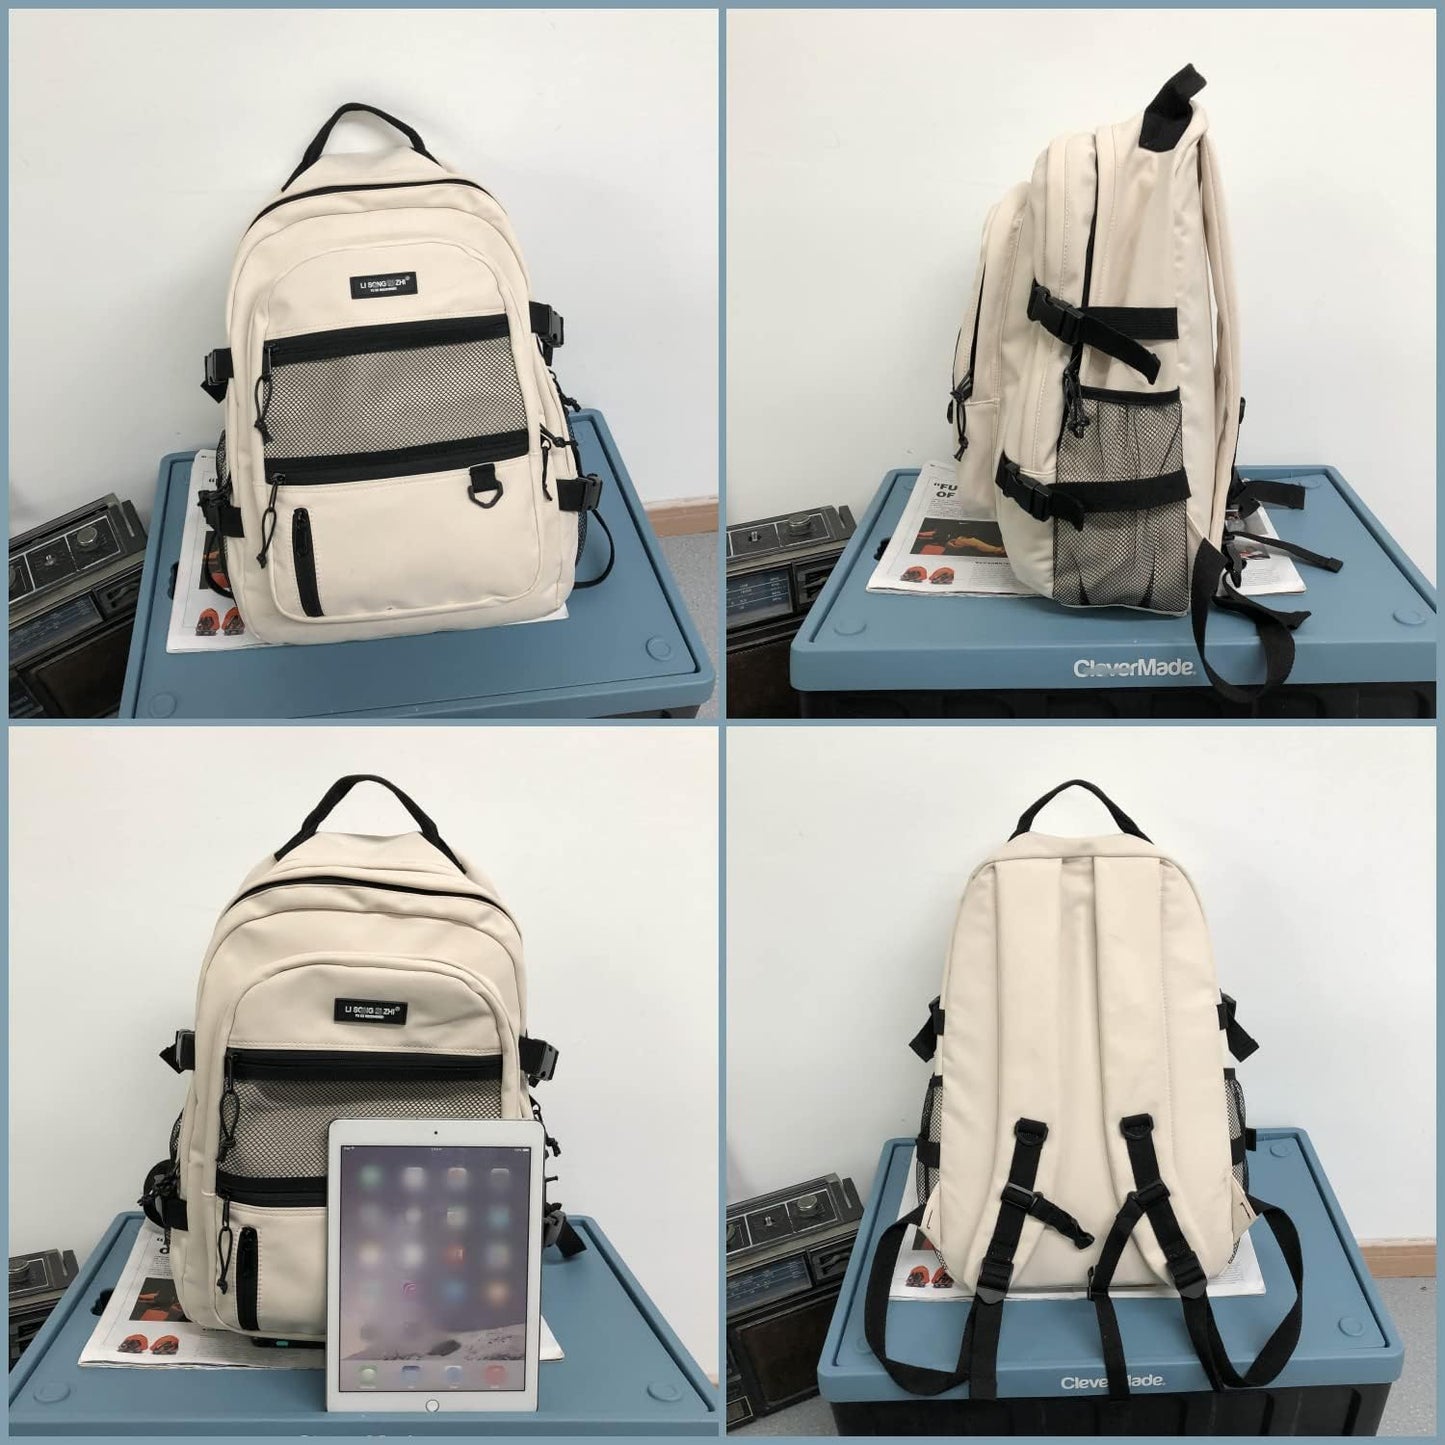 Leaper Water-resistant Laptop Backpacks for Women Lightweight Bag Casual Bookbag Black